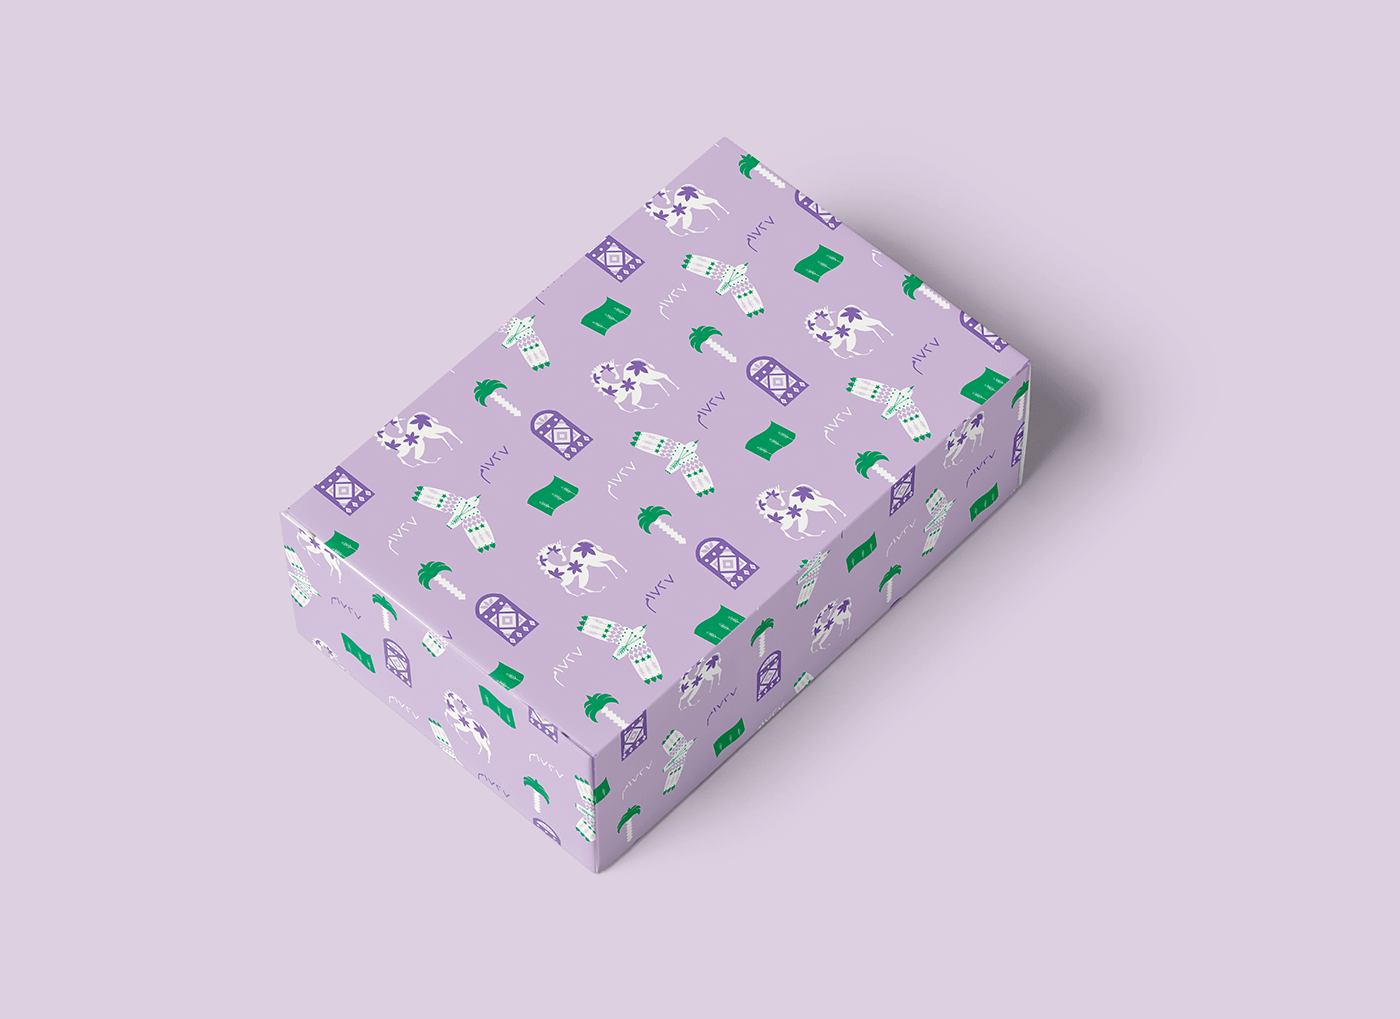 Founding Day giftwrap giftwrapper giftwrapping ILLUSTRATION  illustrations pattern pattern design  Saudi Saudi Arabia